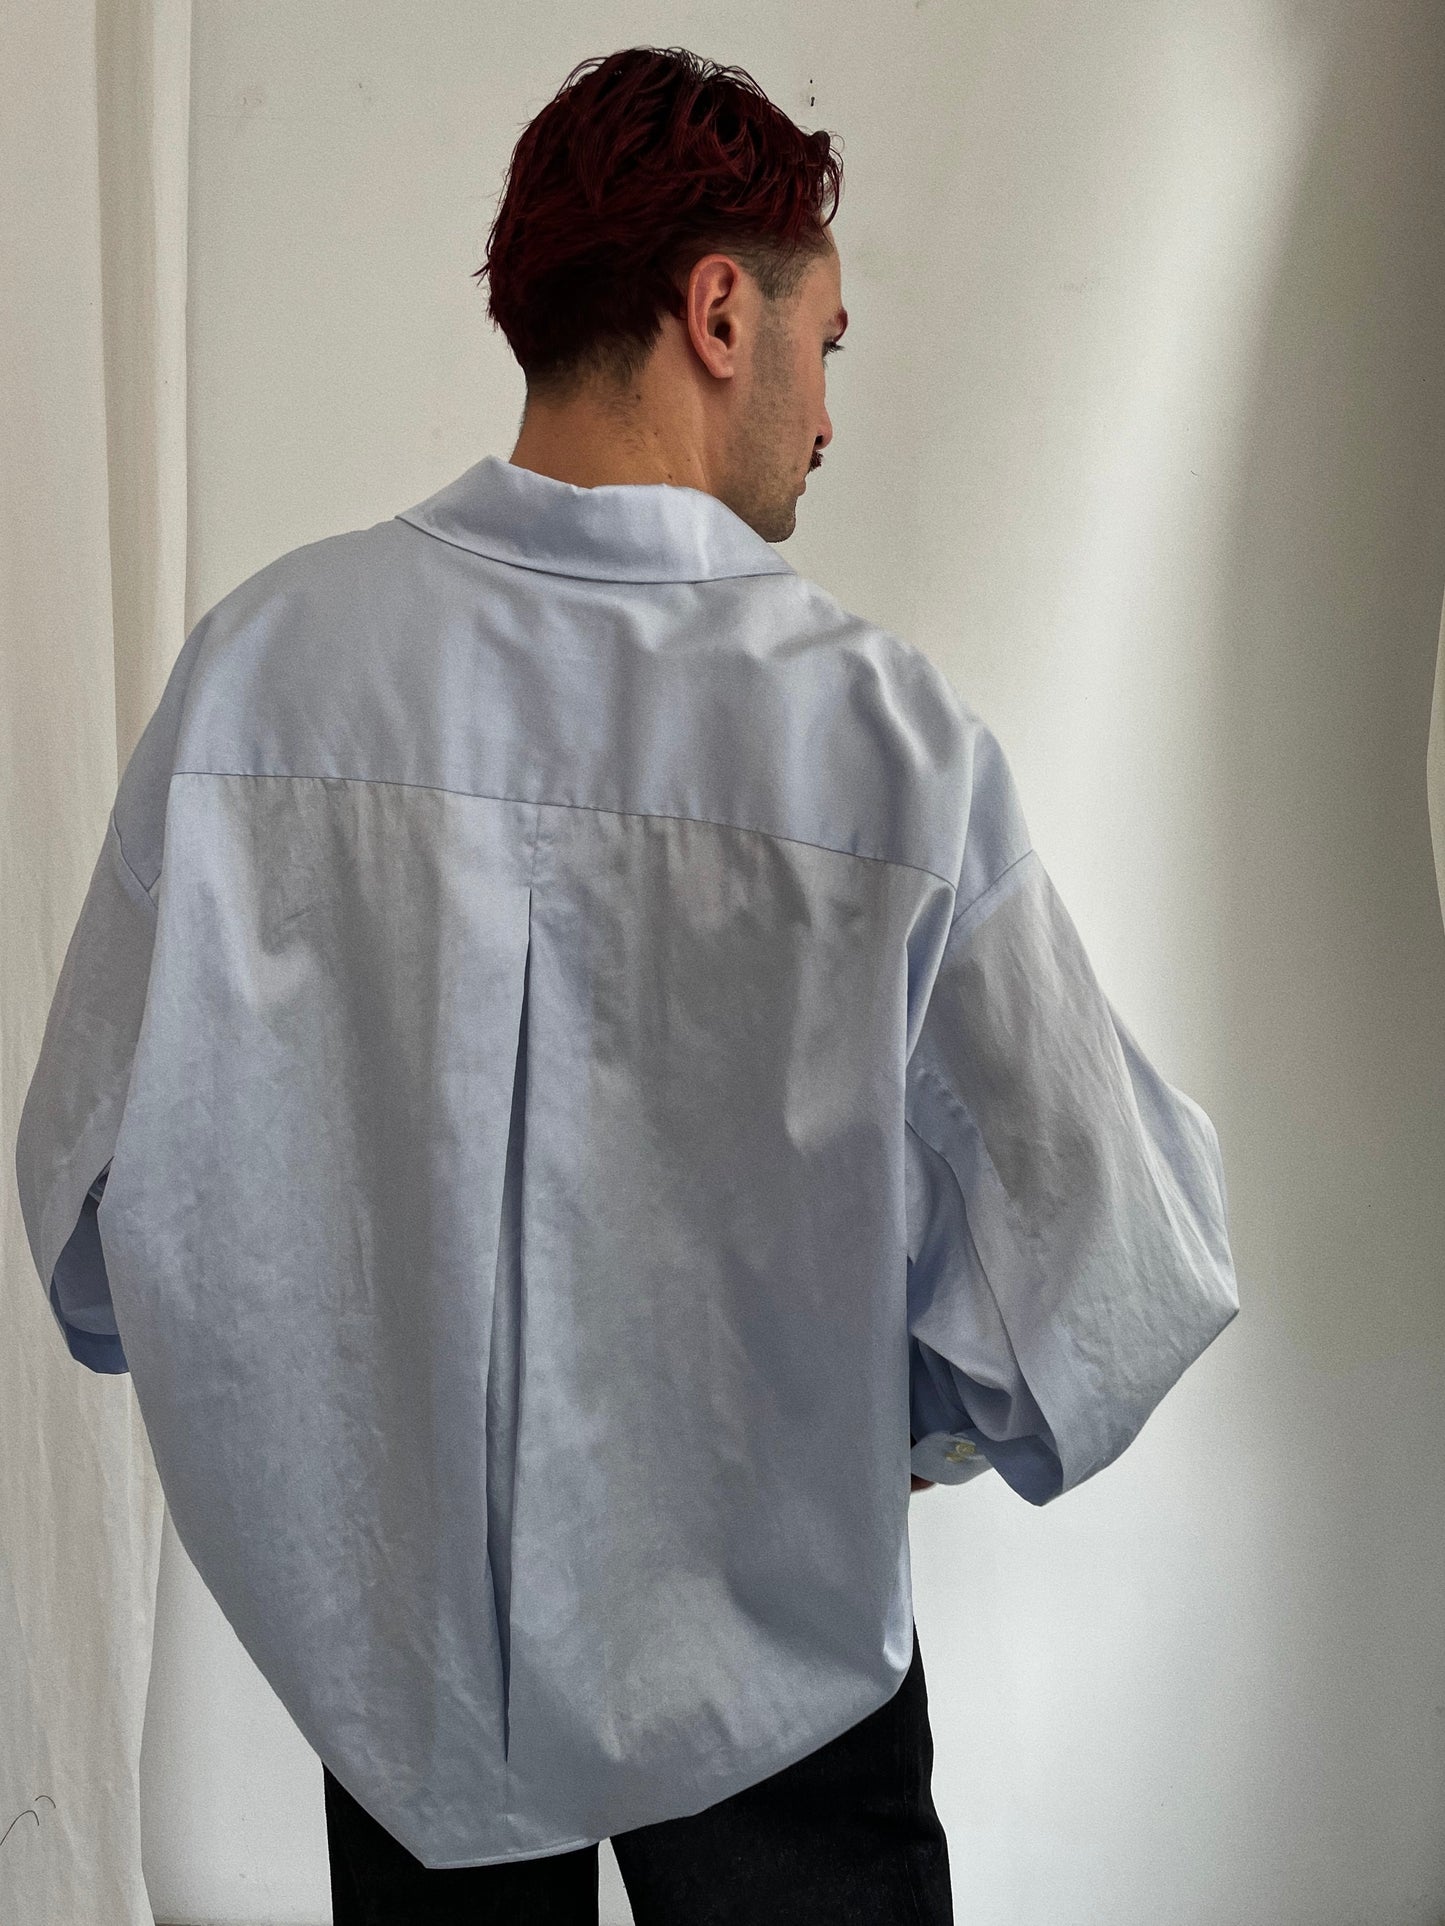 ARCHETYPE Revealing satin shirt